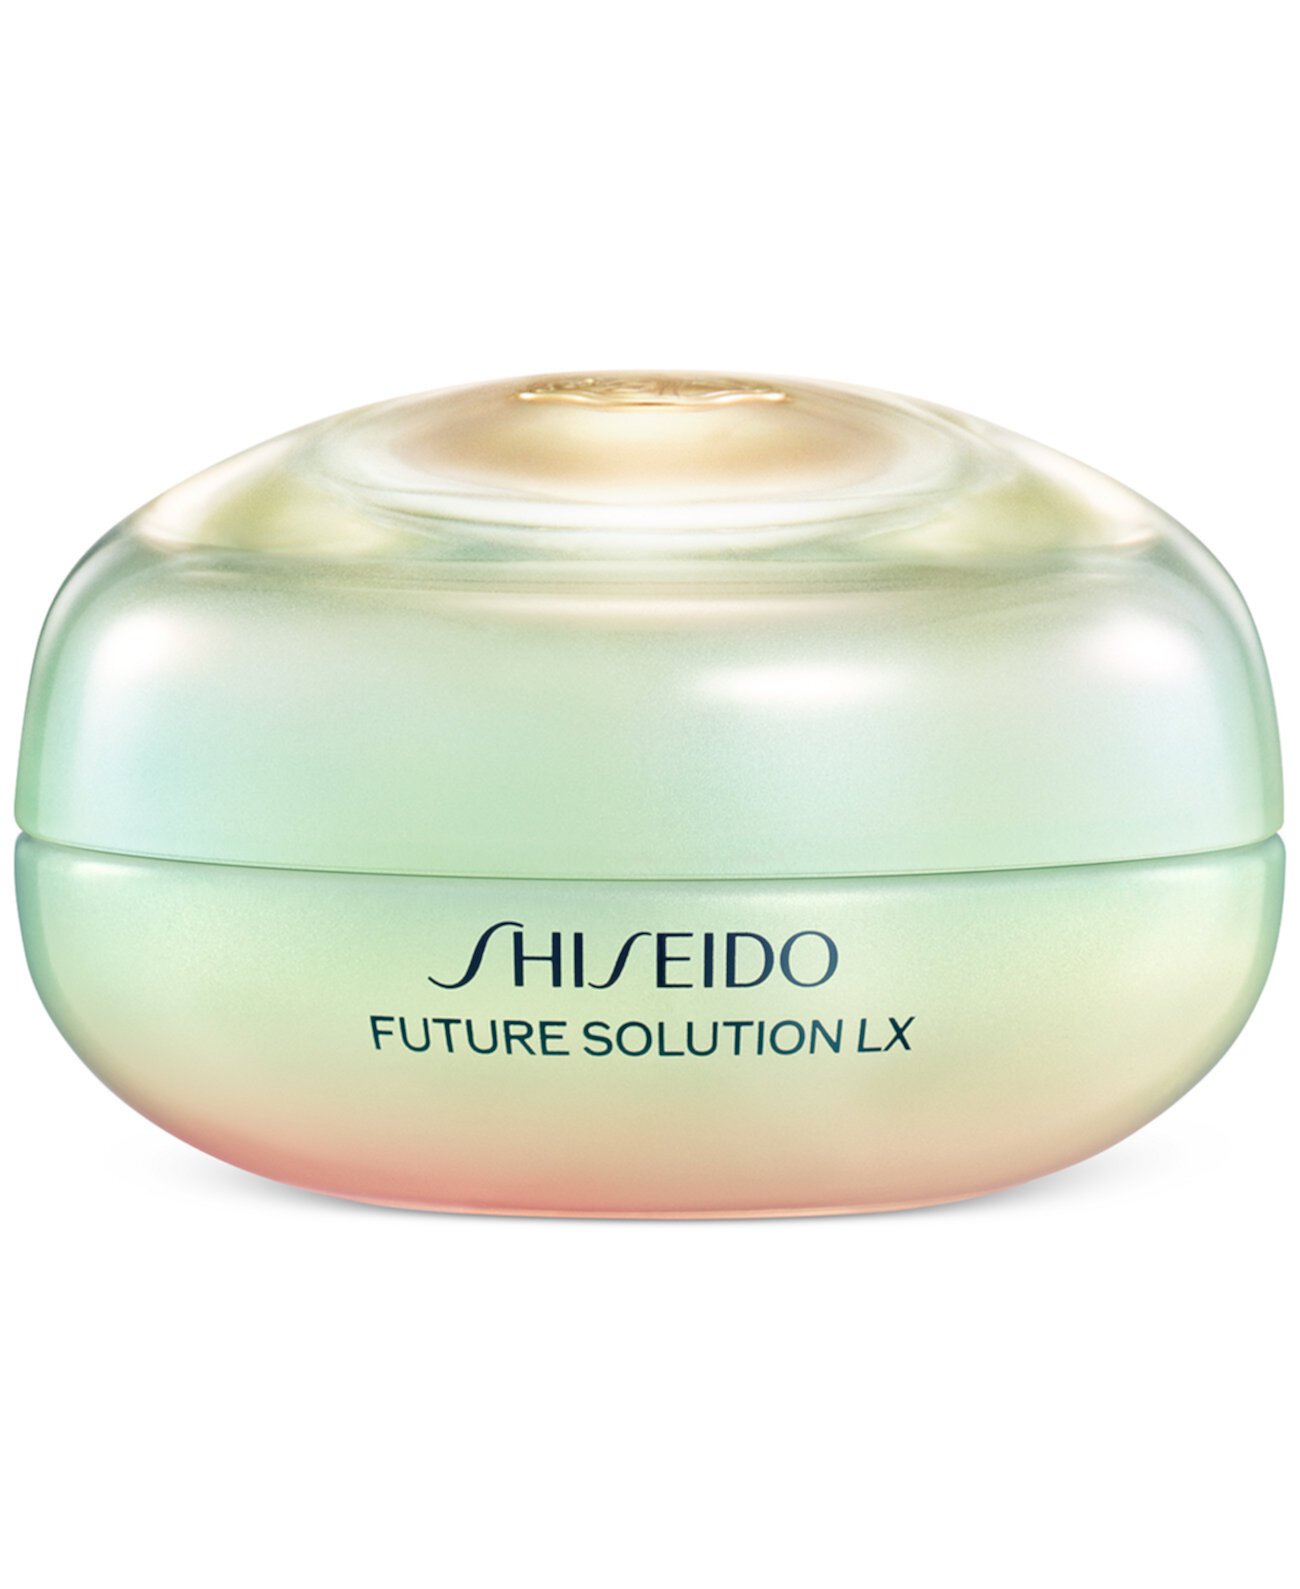 Shiseido Future solution LX. Shiseido Future solution. Shiseido обогащенная очищающая пенка Future solution LX отзывы. Shiseido solution